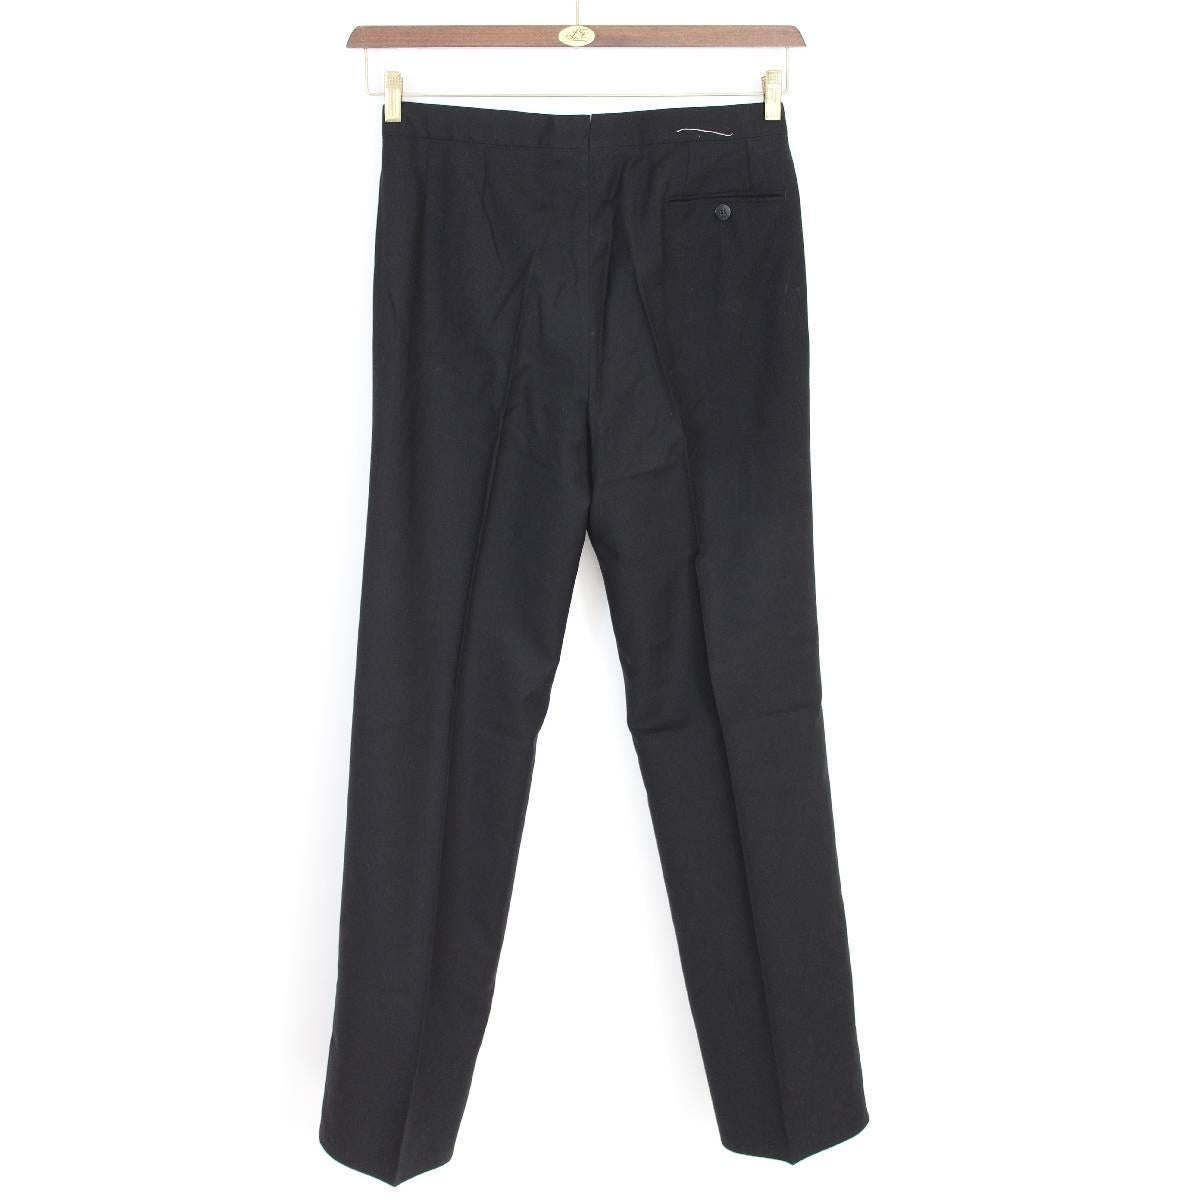 Brioni Complete Black Wool Smoking Pant Suit, Italian  2